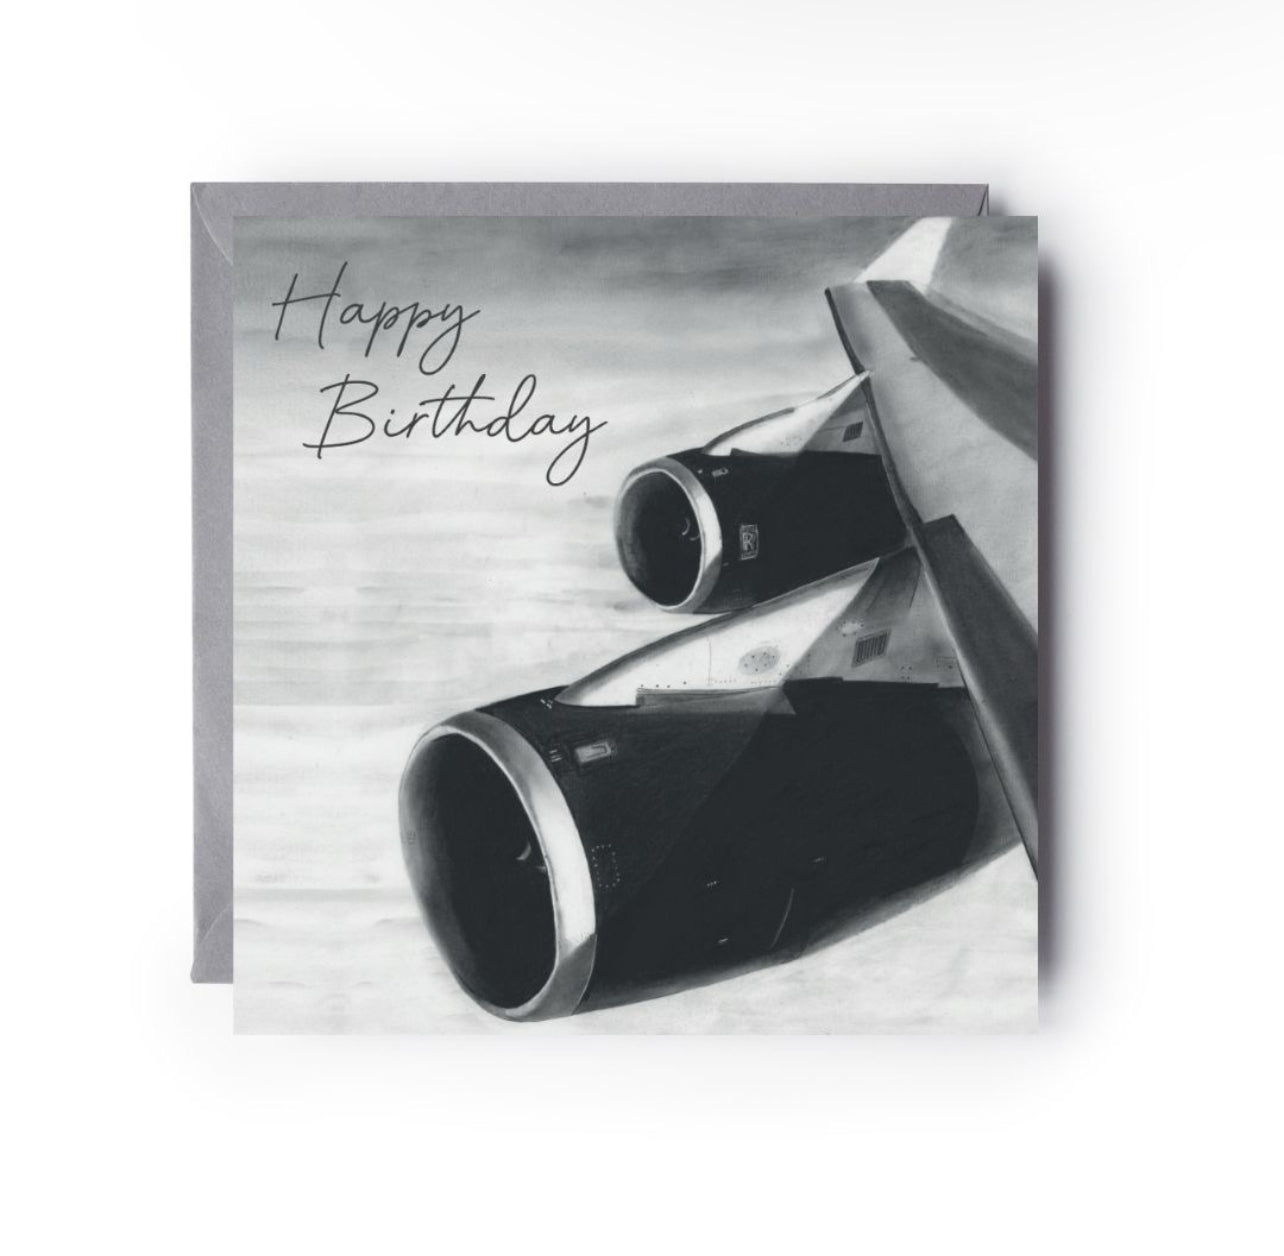 Happy Birthday 747 Wing Card